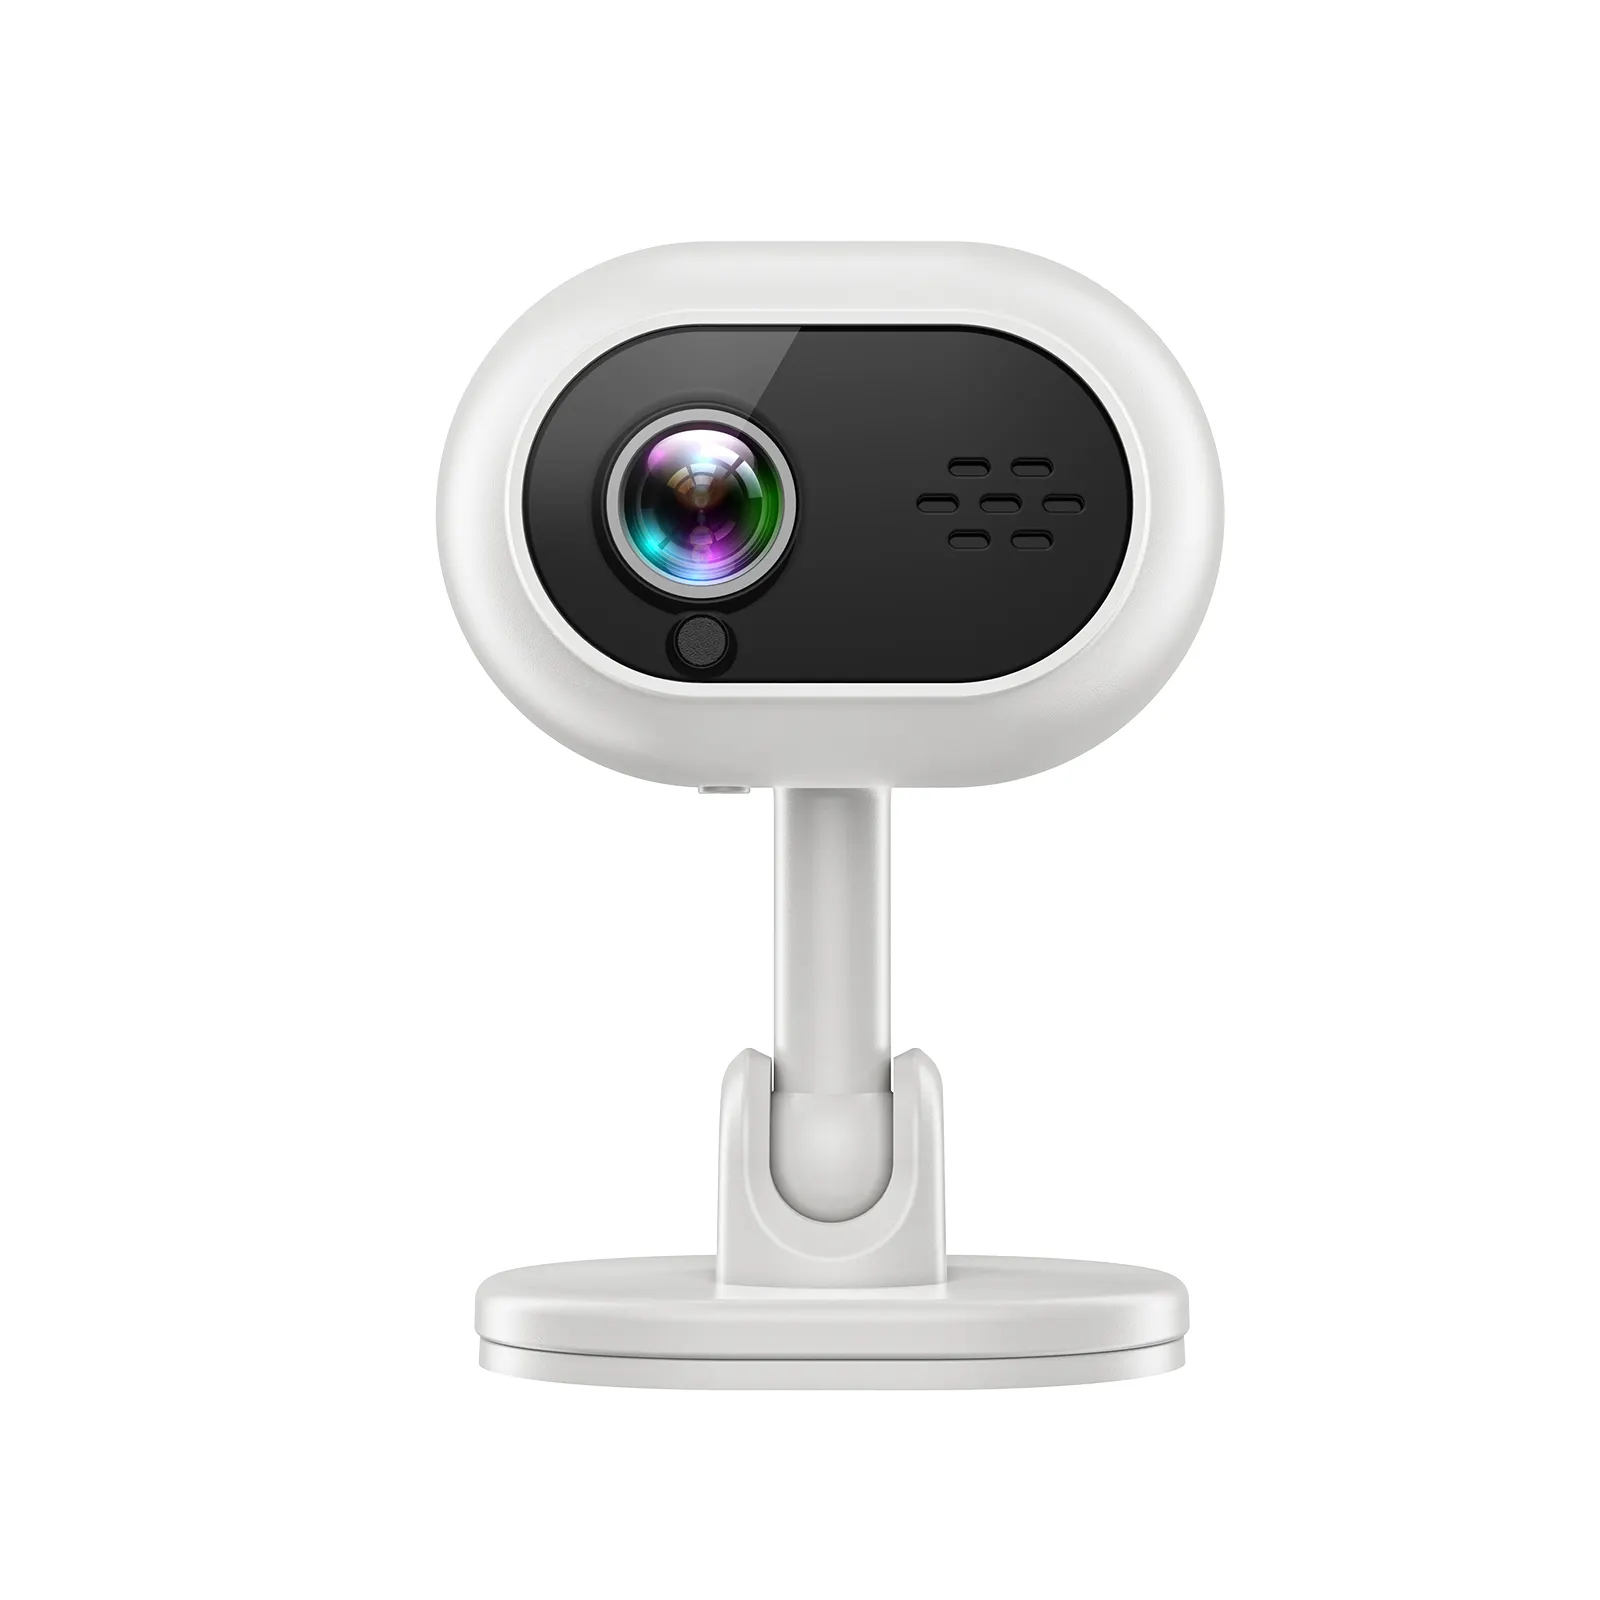 Smart Home Bombilla Luz WiFi Cámara Conversación Seguridad infrarroja inalámbrica VR Cámara de red Mini sistema de cámara CCTV